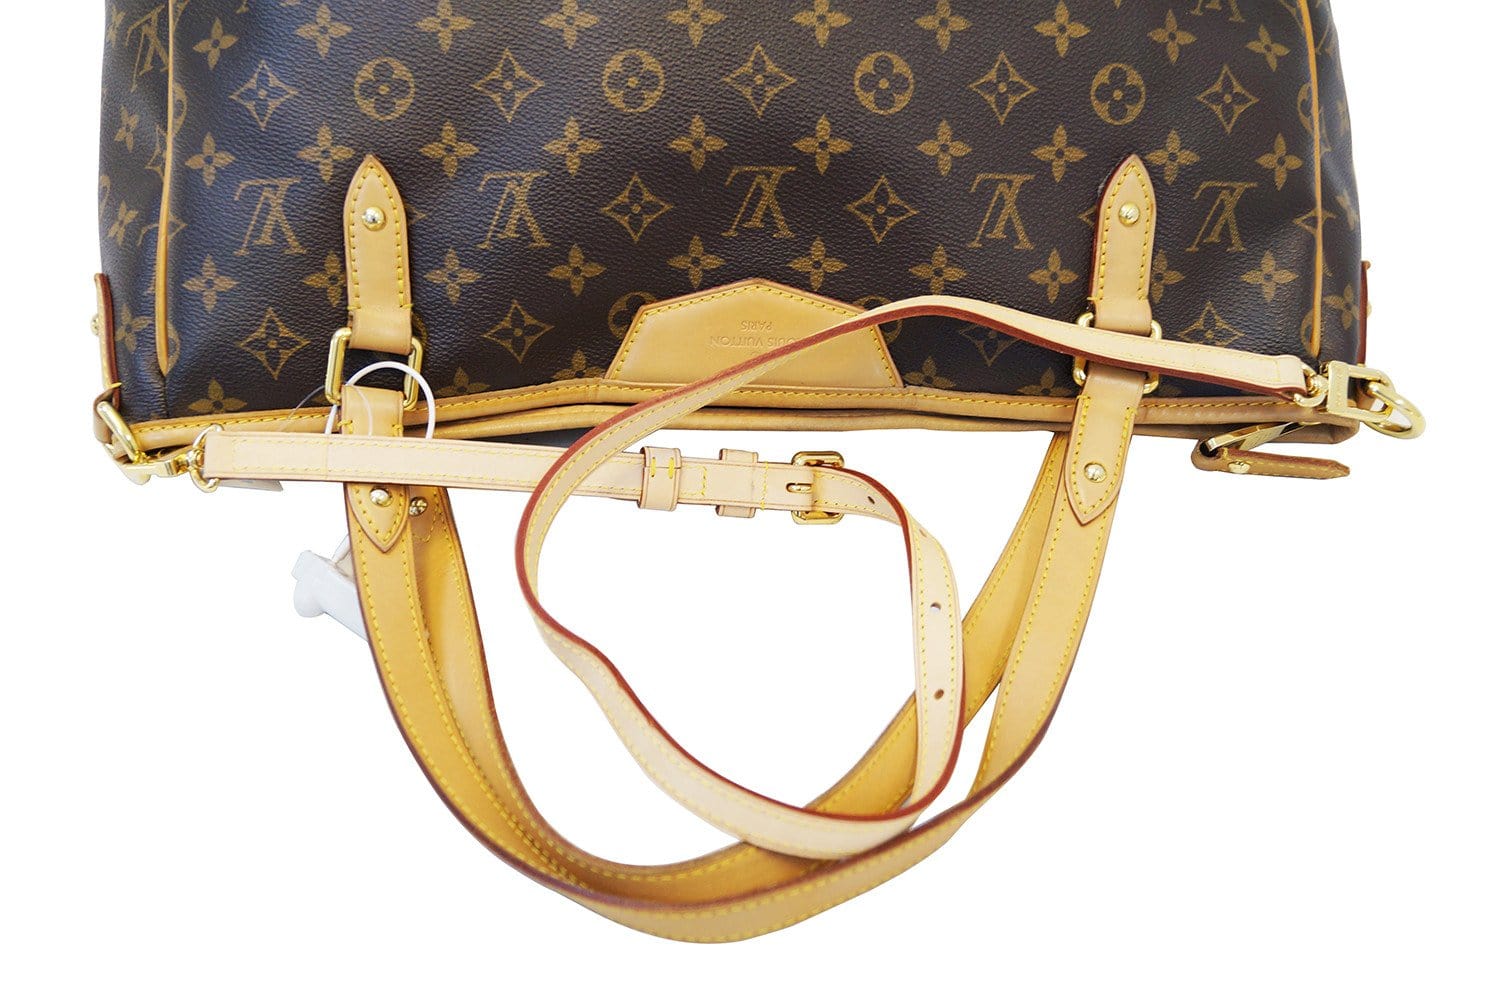 Louis Vuitton Estrela Gm Sized Bag